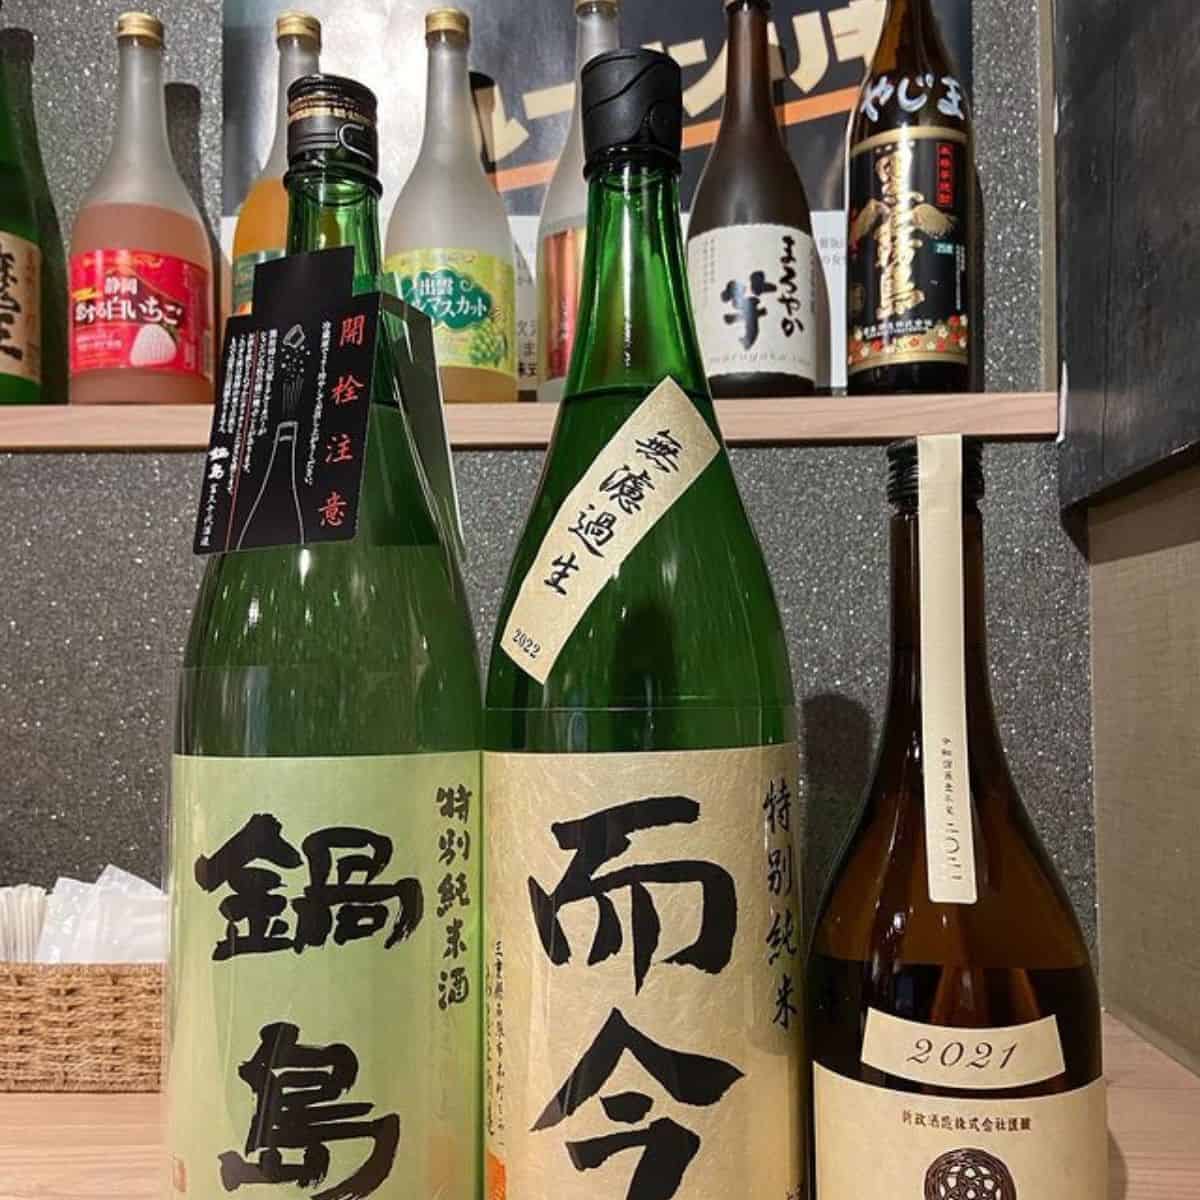 A display of different bottles of Sake